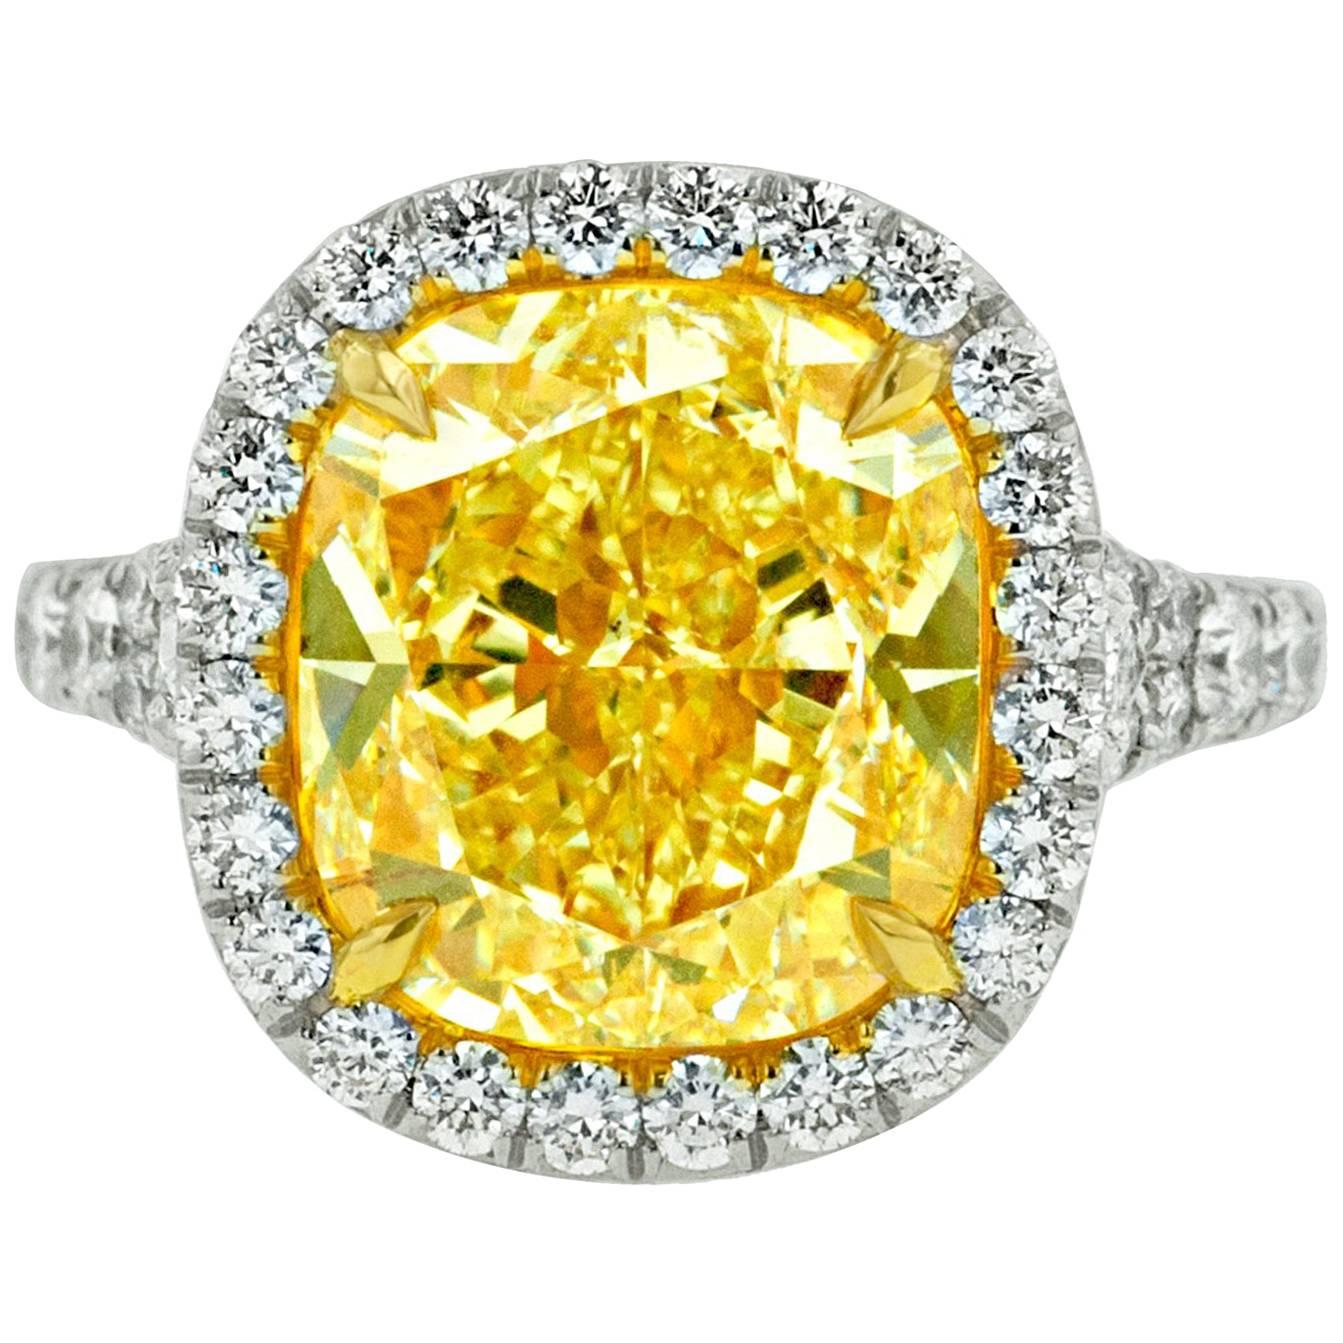 Canary 7.65 Carat Fancy Yellow VS2 Diamond Ring